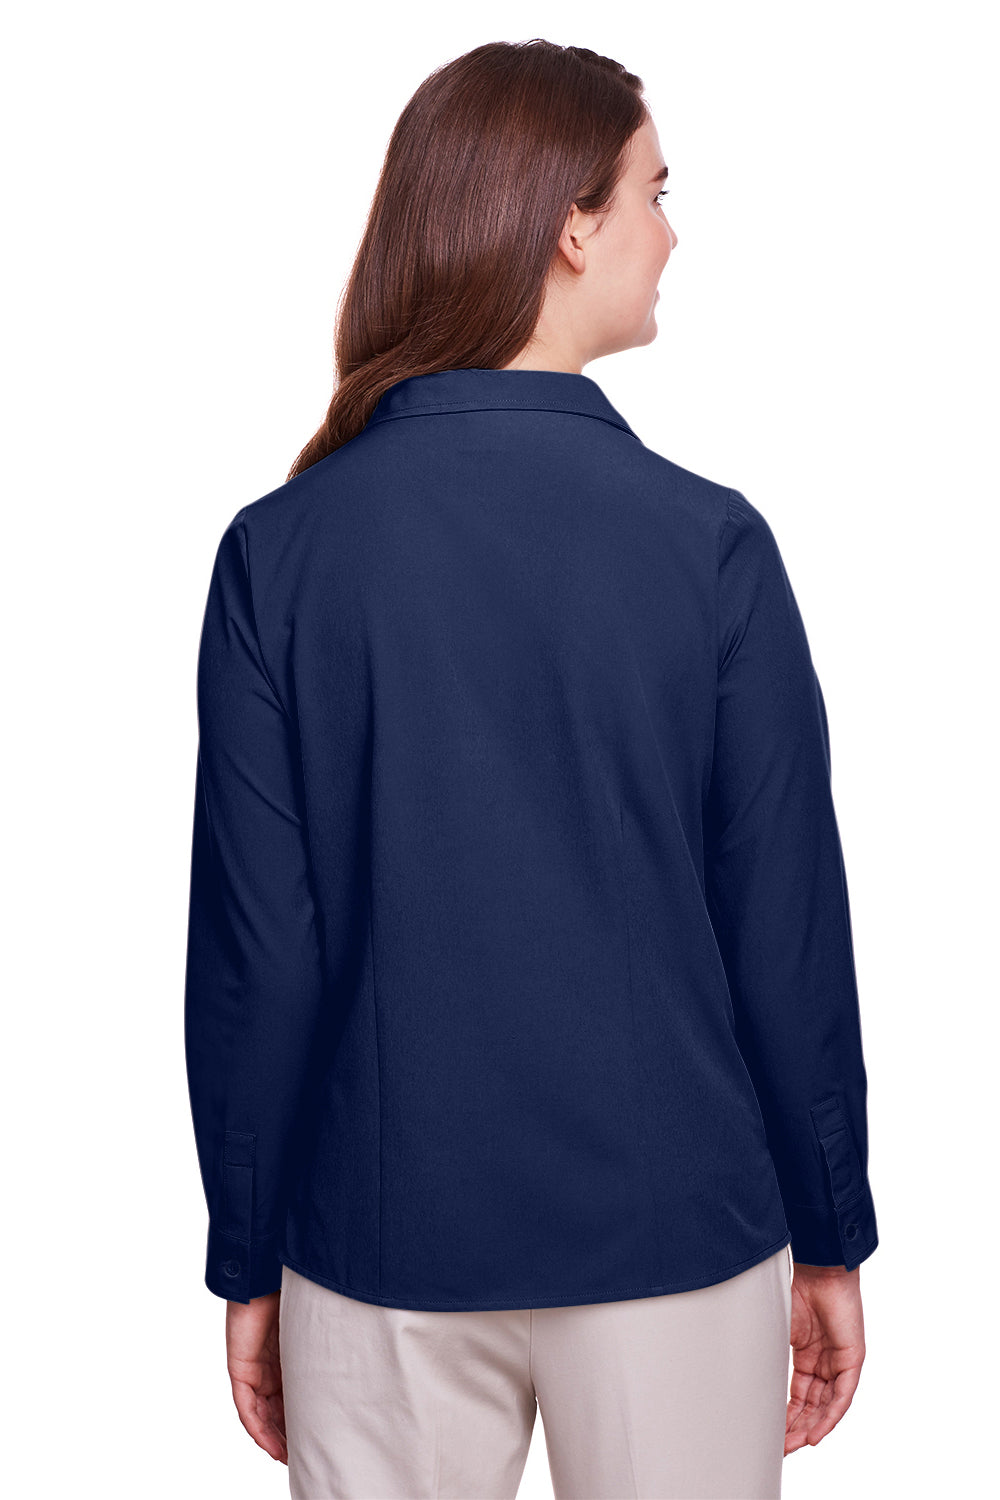 UltraClub UC500W Womens Bradley Performance Moisture Wicking Long Sleeve Button Down Shirt Navy Blue Back